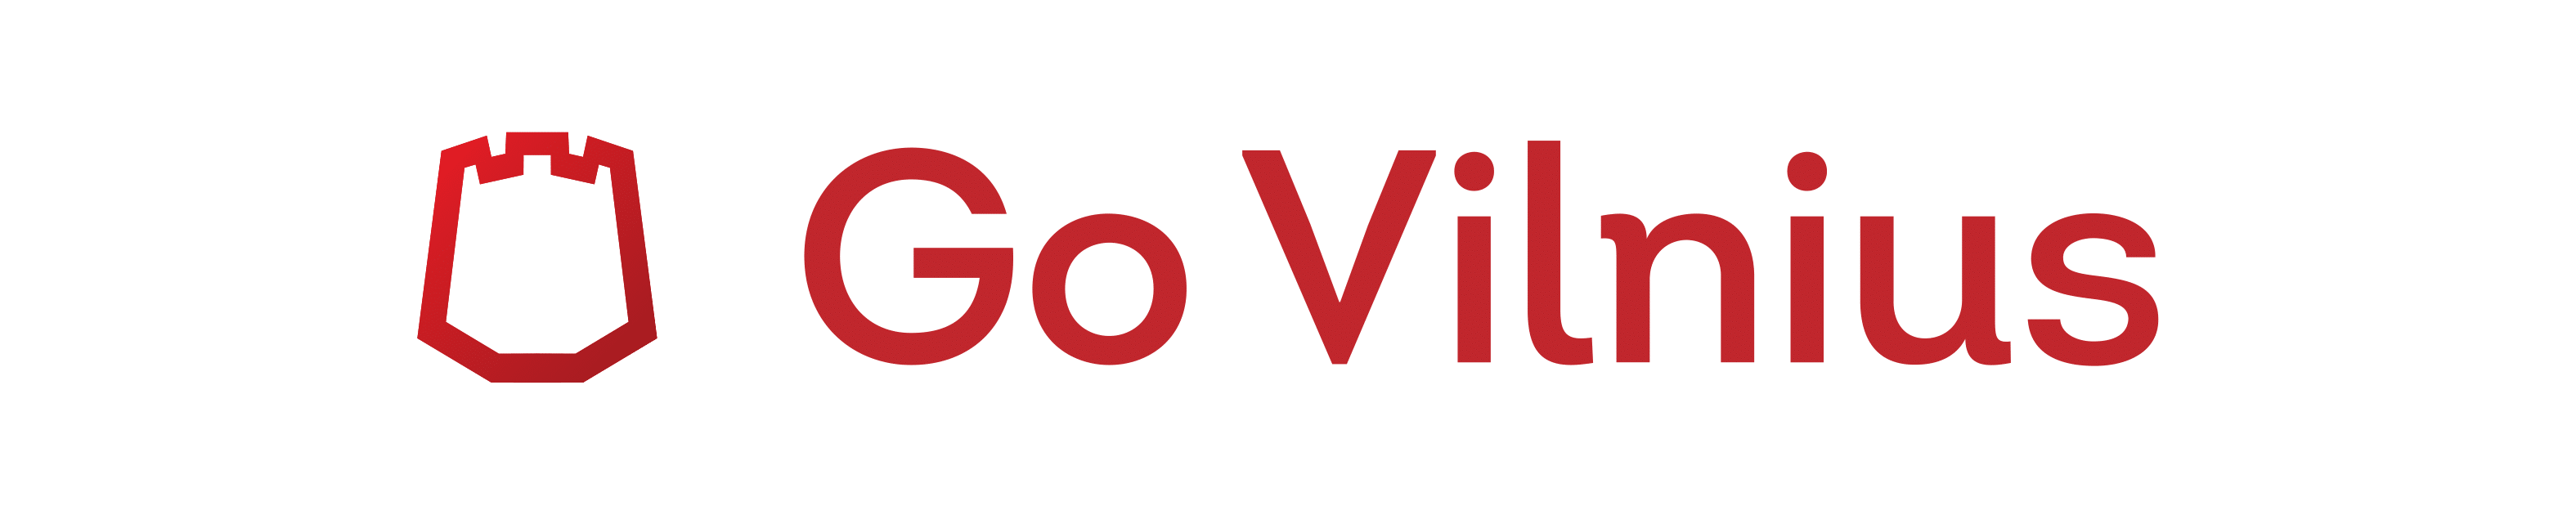 go vilnius 8x40 red on transparent 1